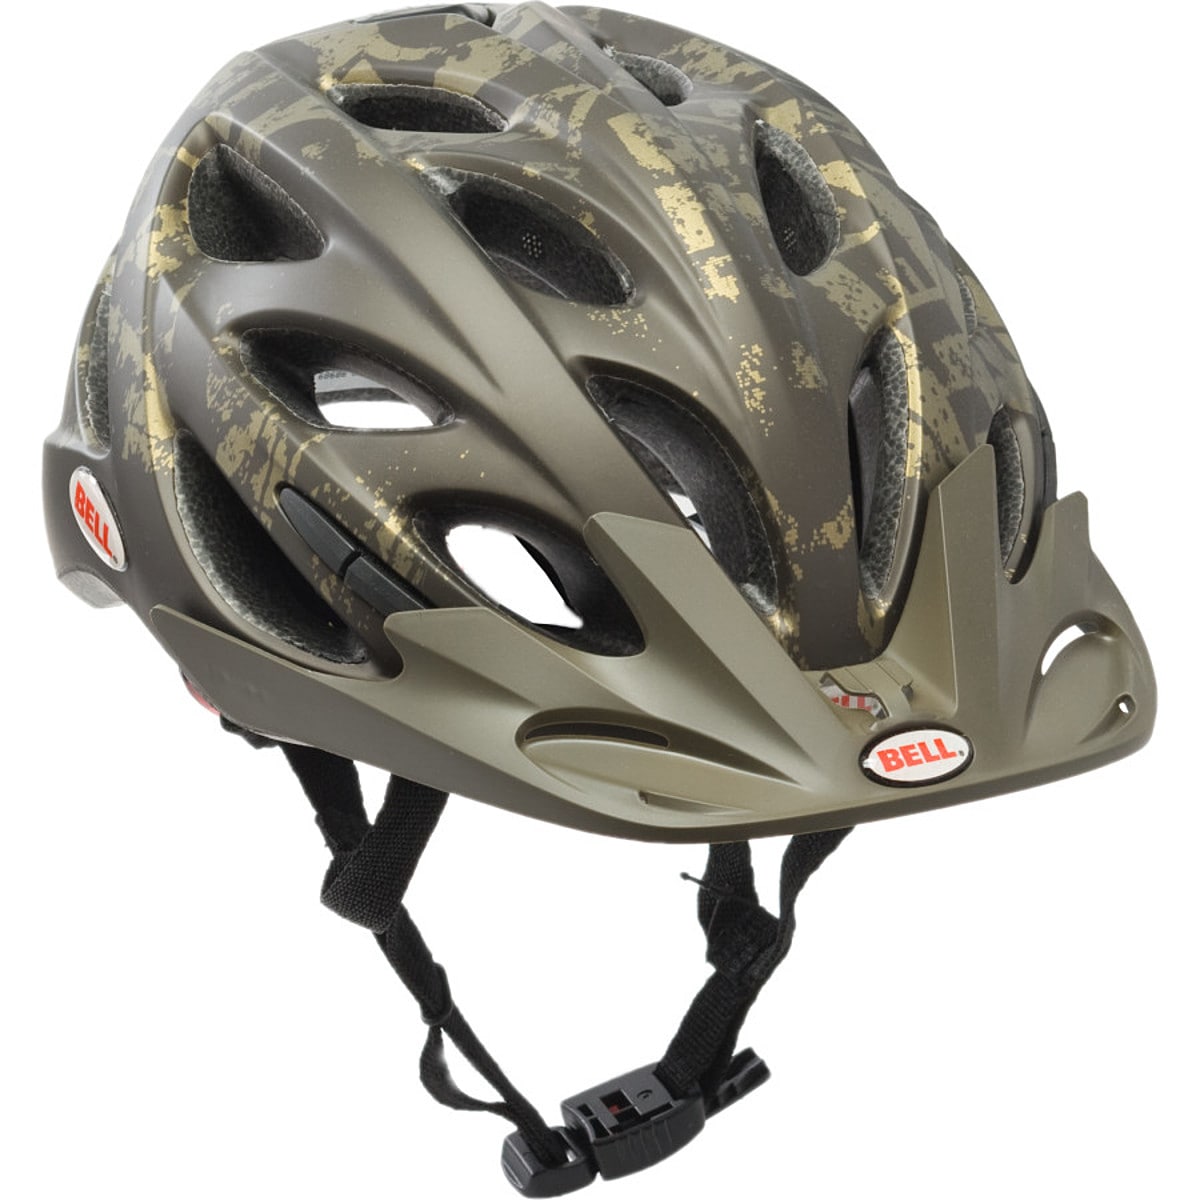 bell muni bike helmet